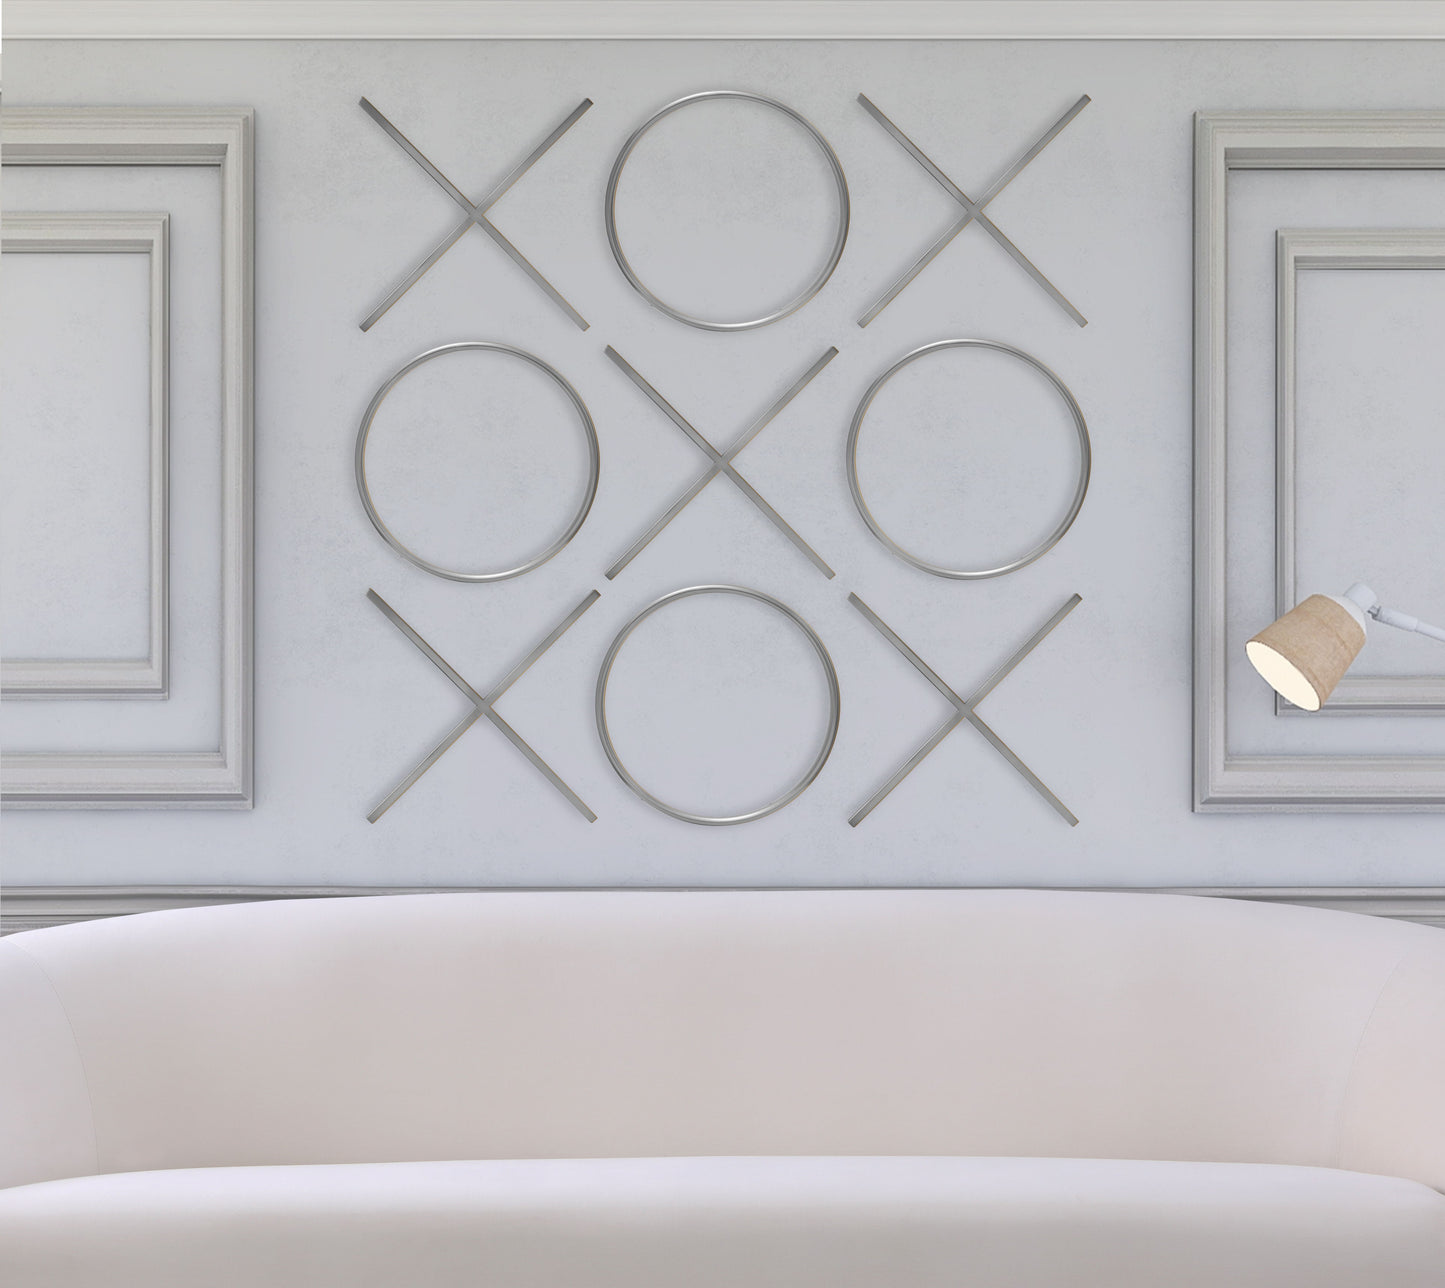 XOXO - Wall Decor - Pearl Silver